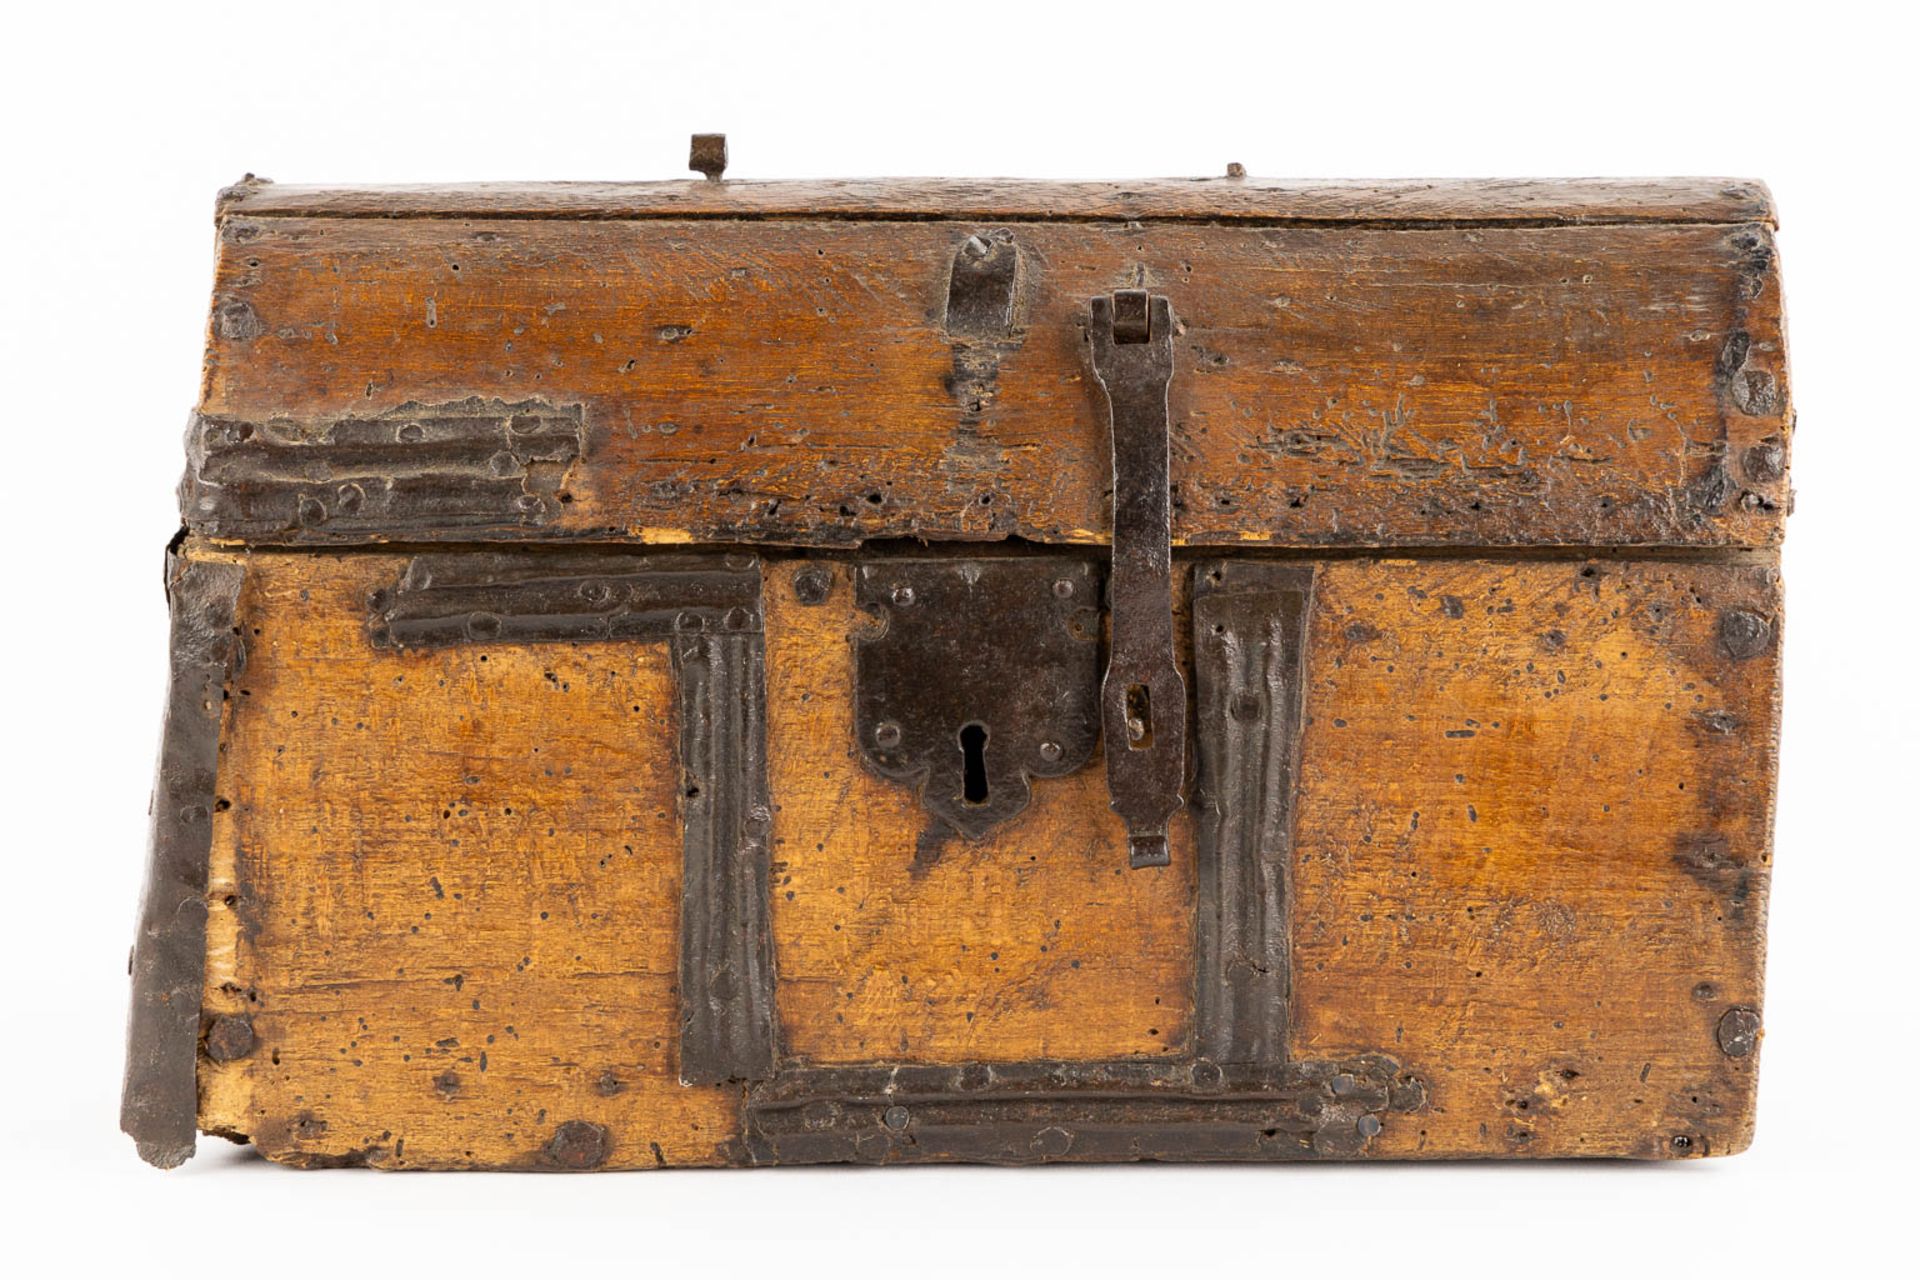 An antique money box or storage chest, wood and wrought iron, 16th/17th C. (L:20 x W:36 x H:22 cm) - Bild 3 aus 14